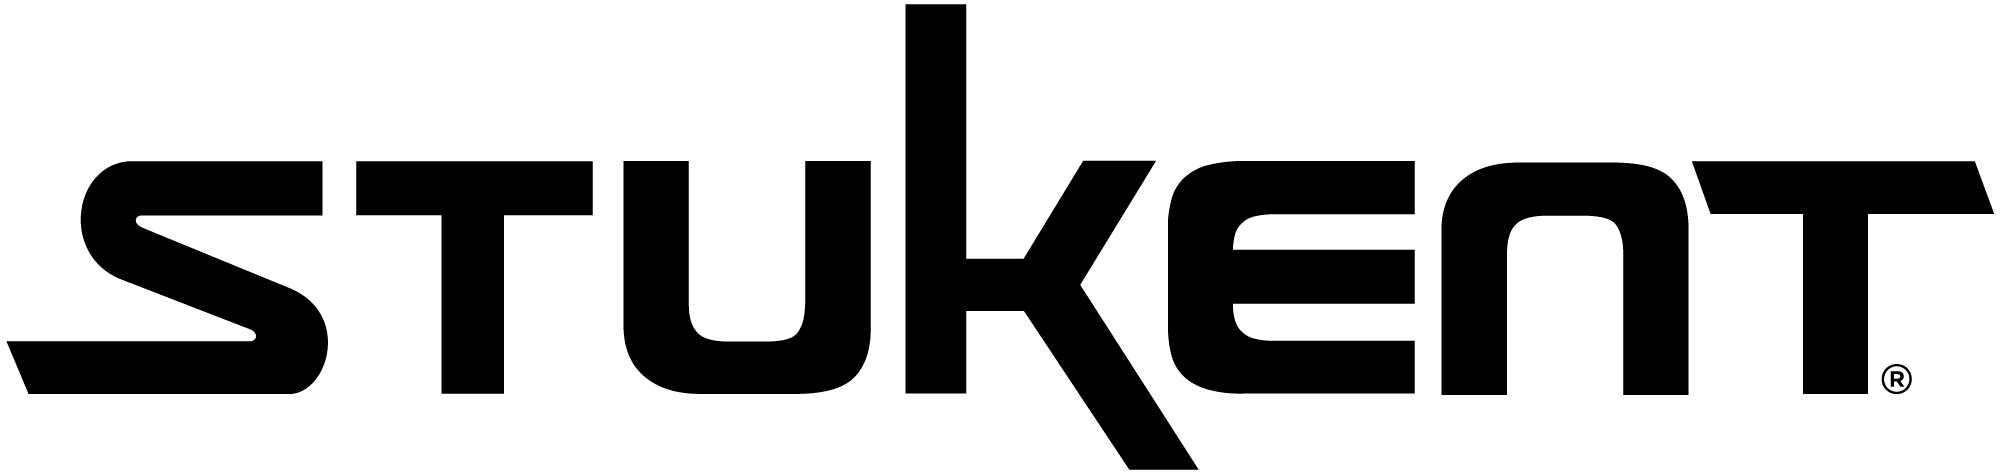 Stukent logo.png